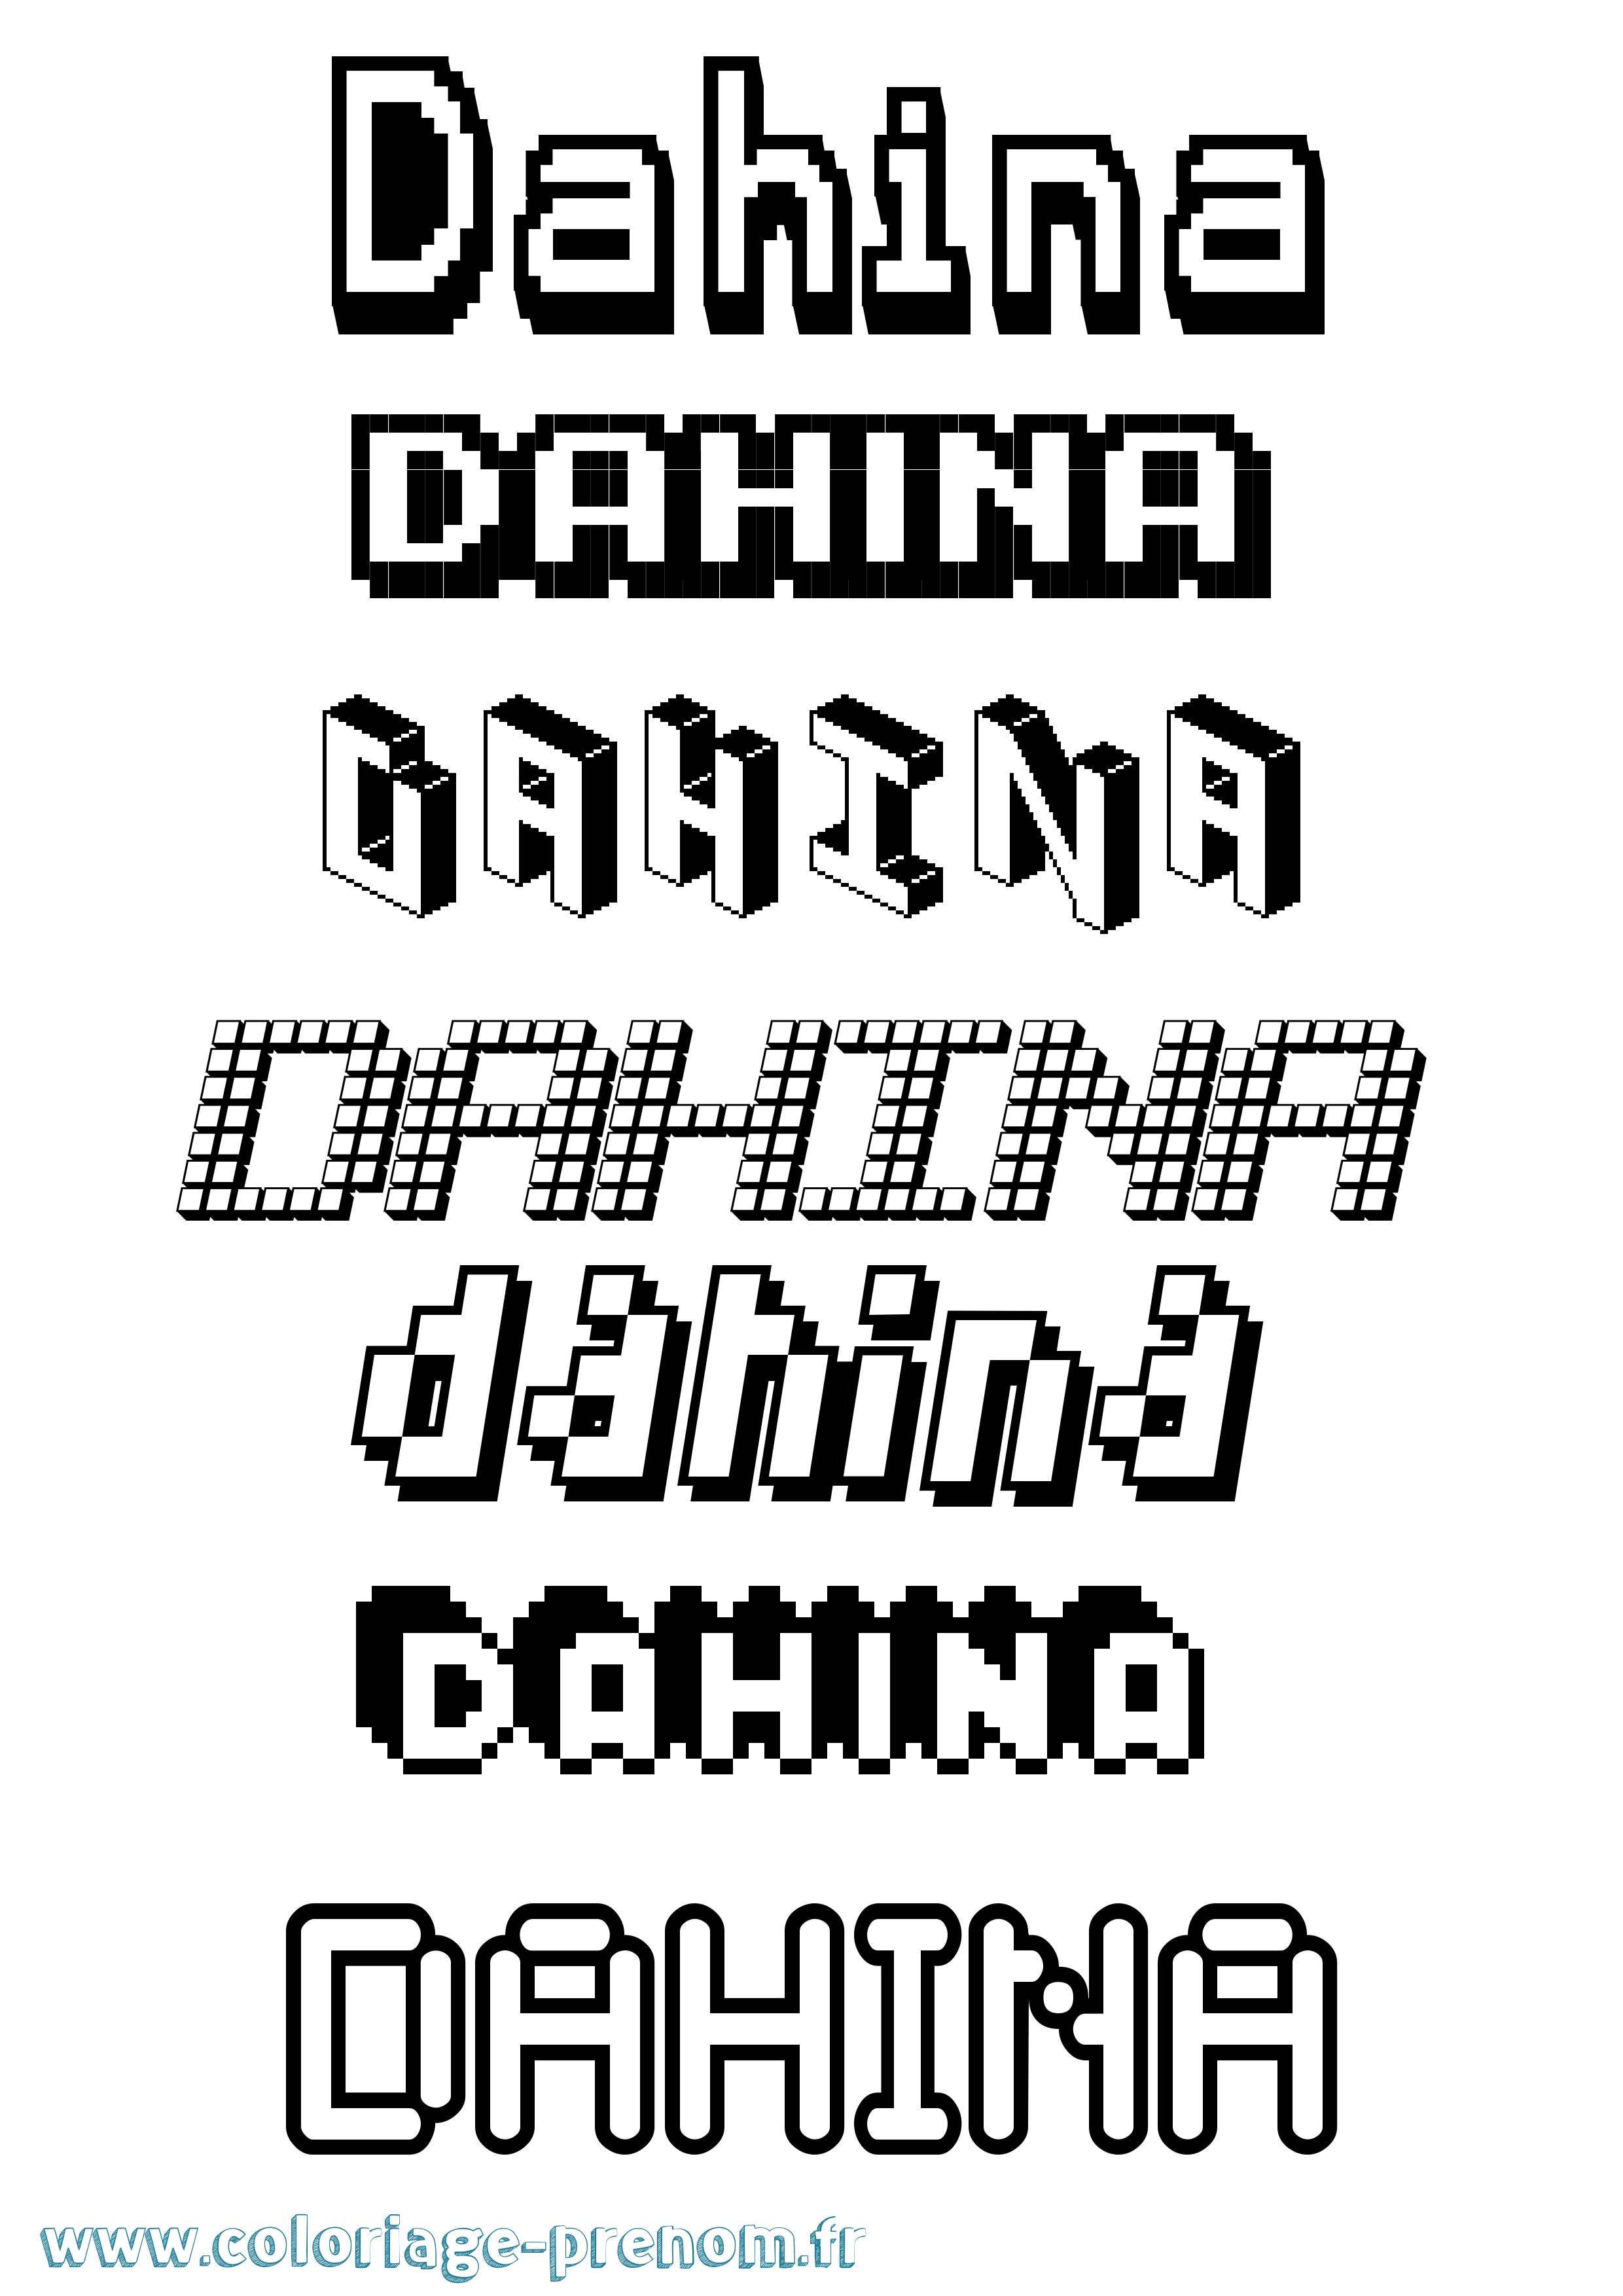 Coloriage prénom Dahina Pixel